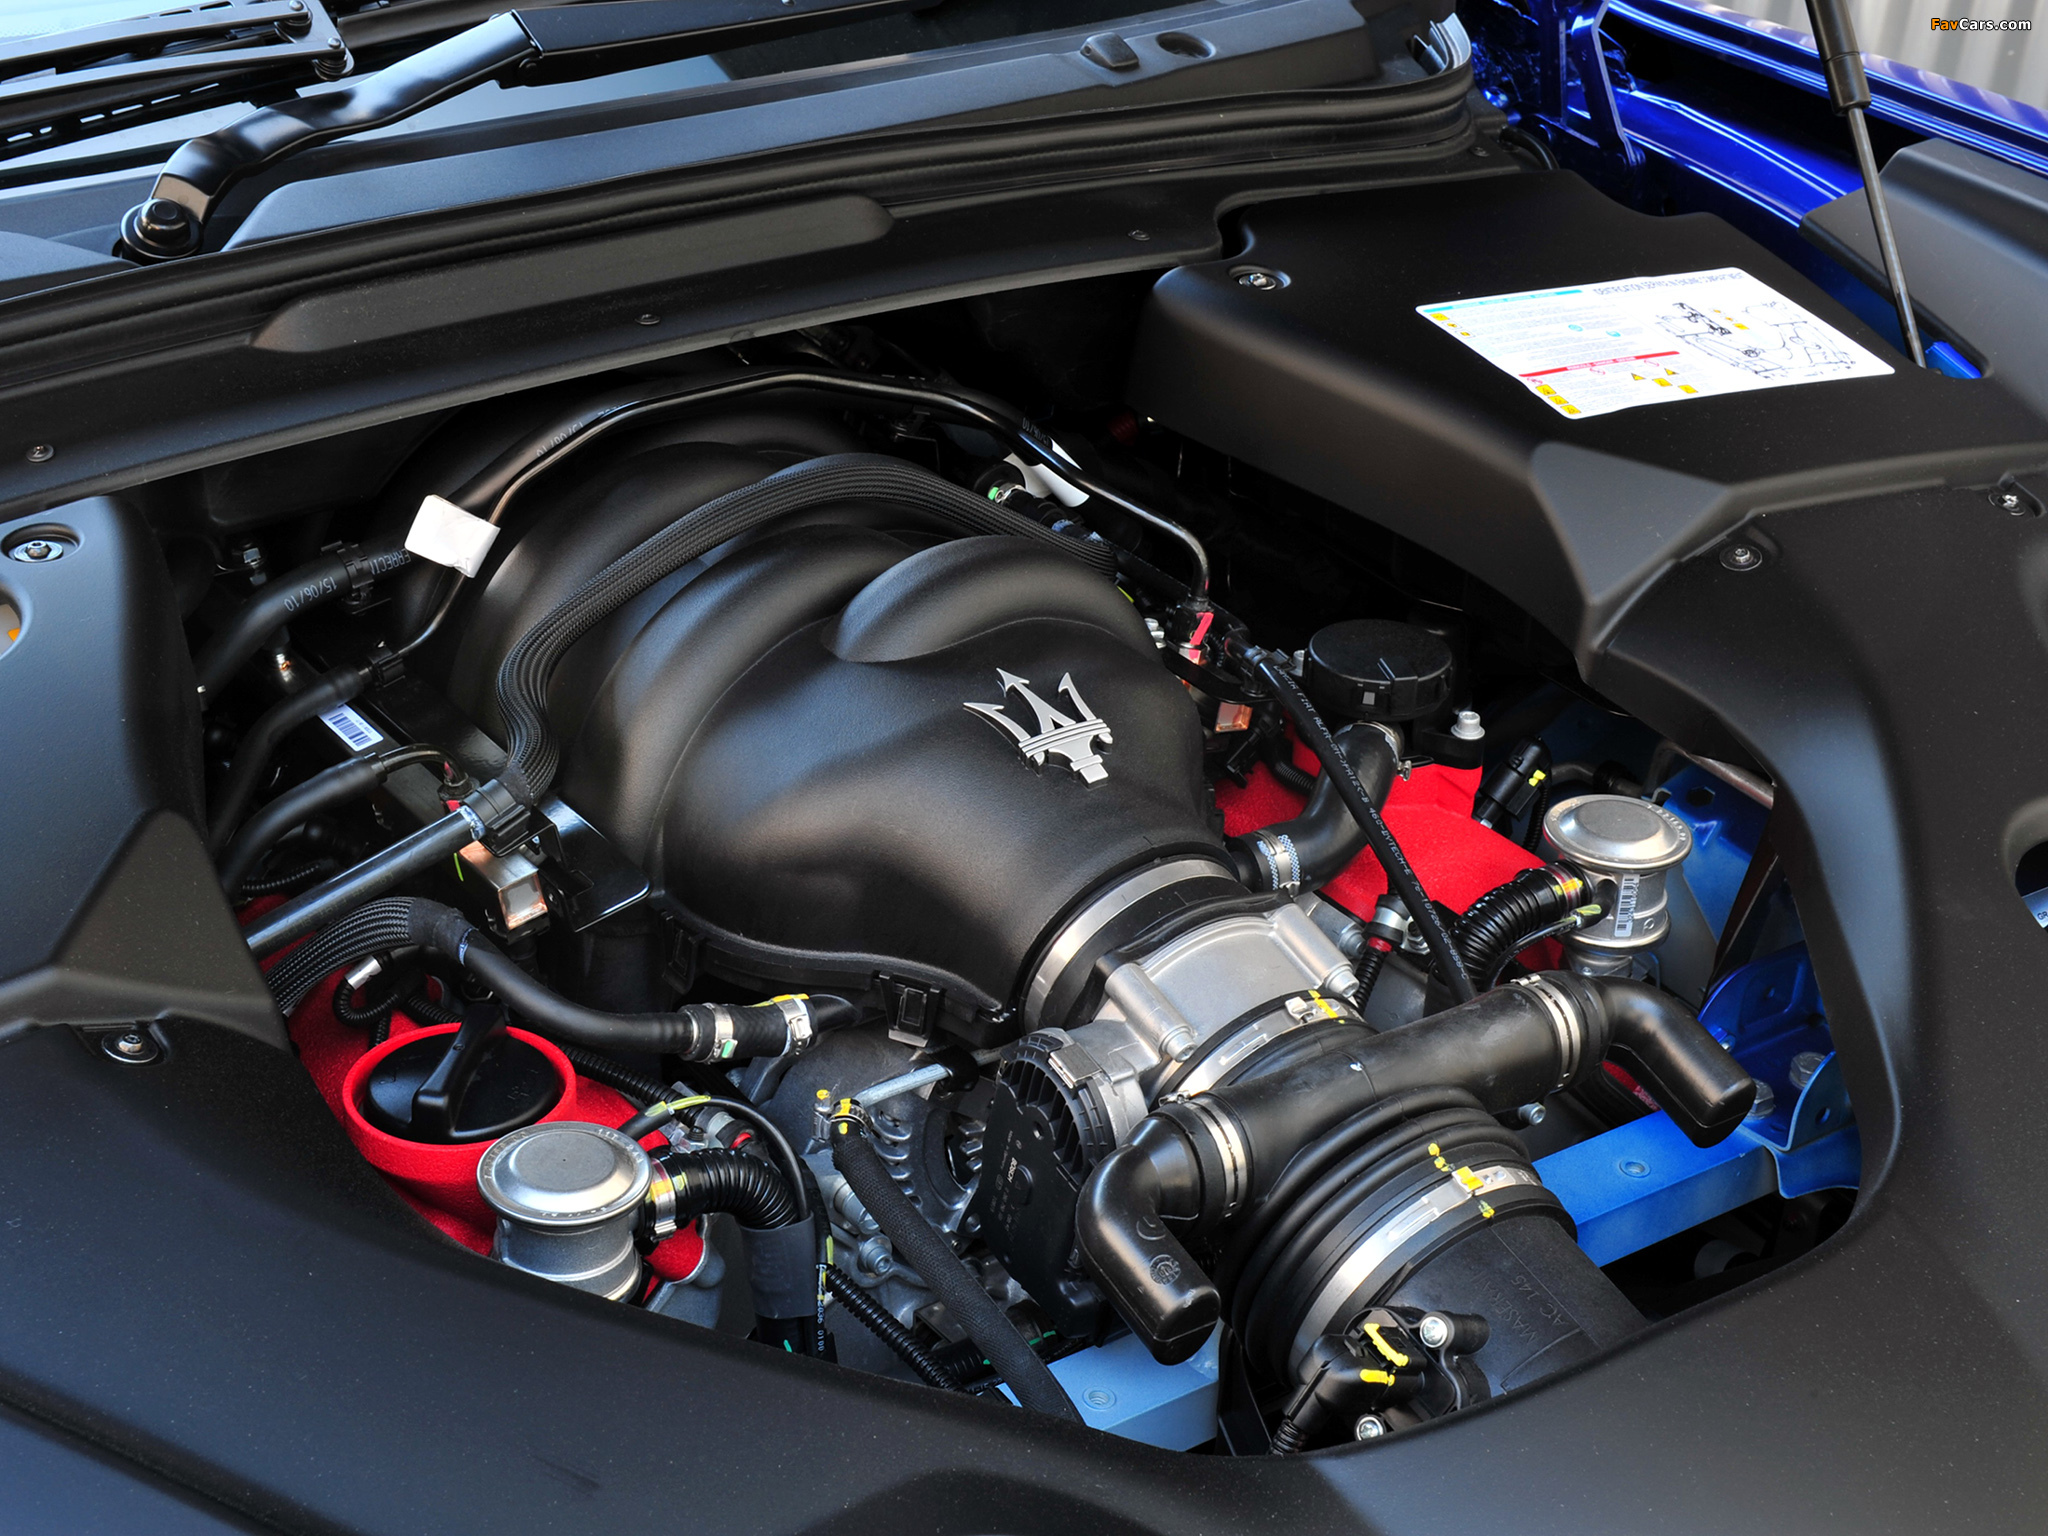 Двигатель мазерати. Maserati GRANTURISMO двигатель. Мазерати Кватропорте двигатель. Мотор 2.8 Мазерати Кватропорте. Maserati GRANTURISMO 4.7 engine.